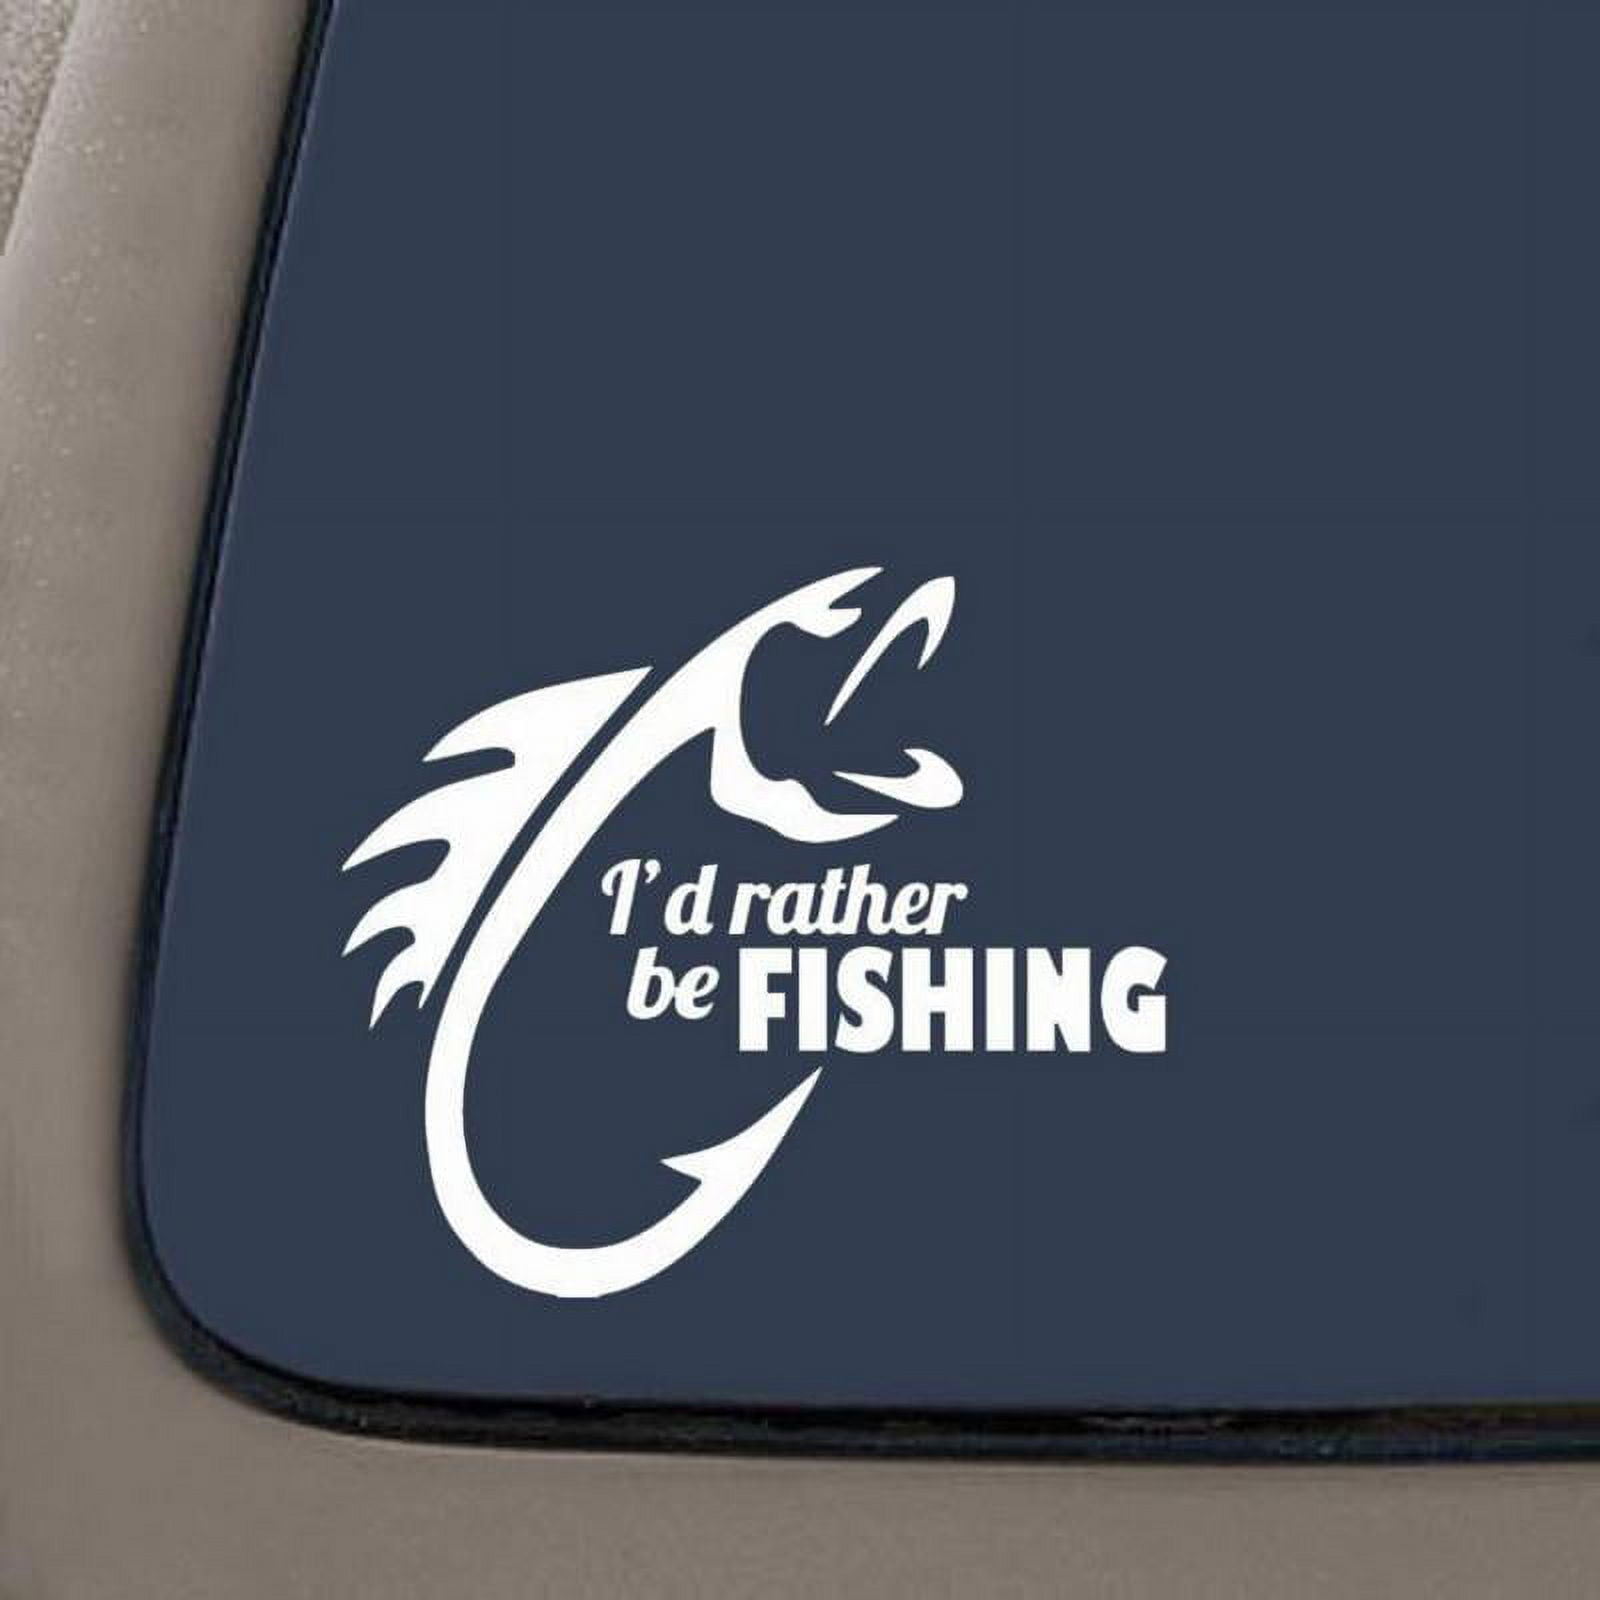 Gone Fishing Perfect Fishing Gift - Fishing Decals for Trucks - Funny  Fishing Bumper Sticker - Bumper Vinyl Decal - Waterproof Car, Window, Wall